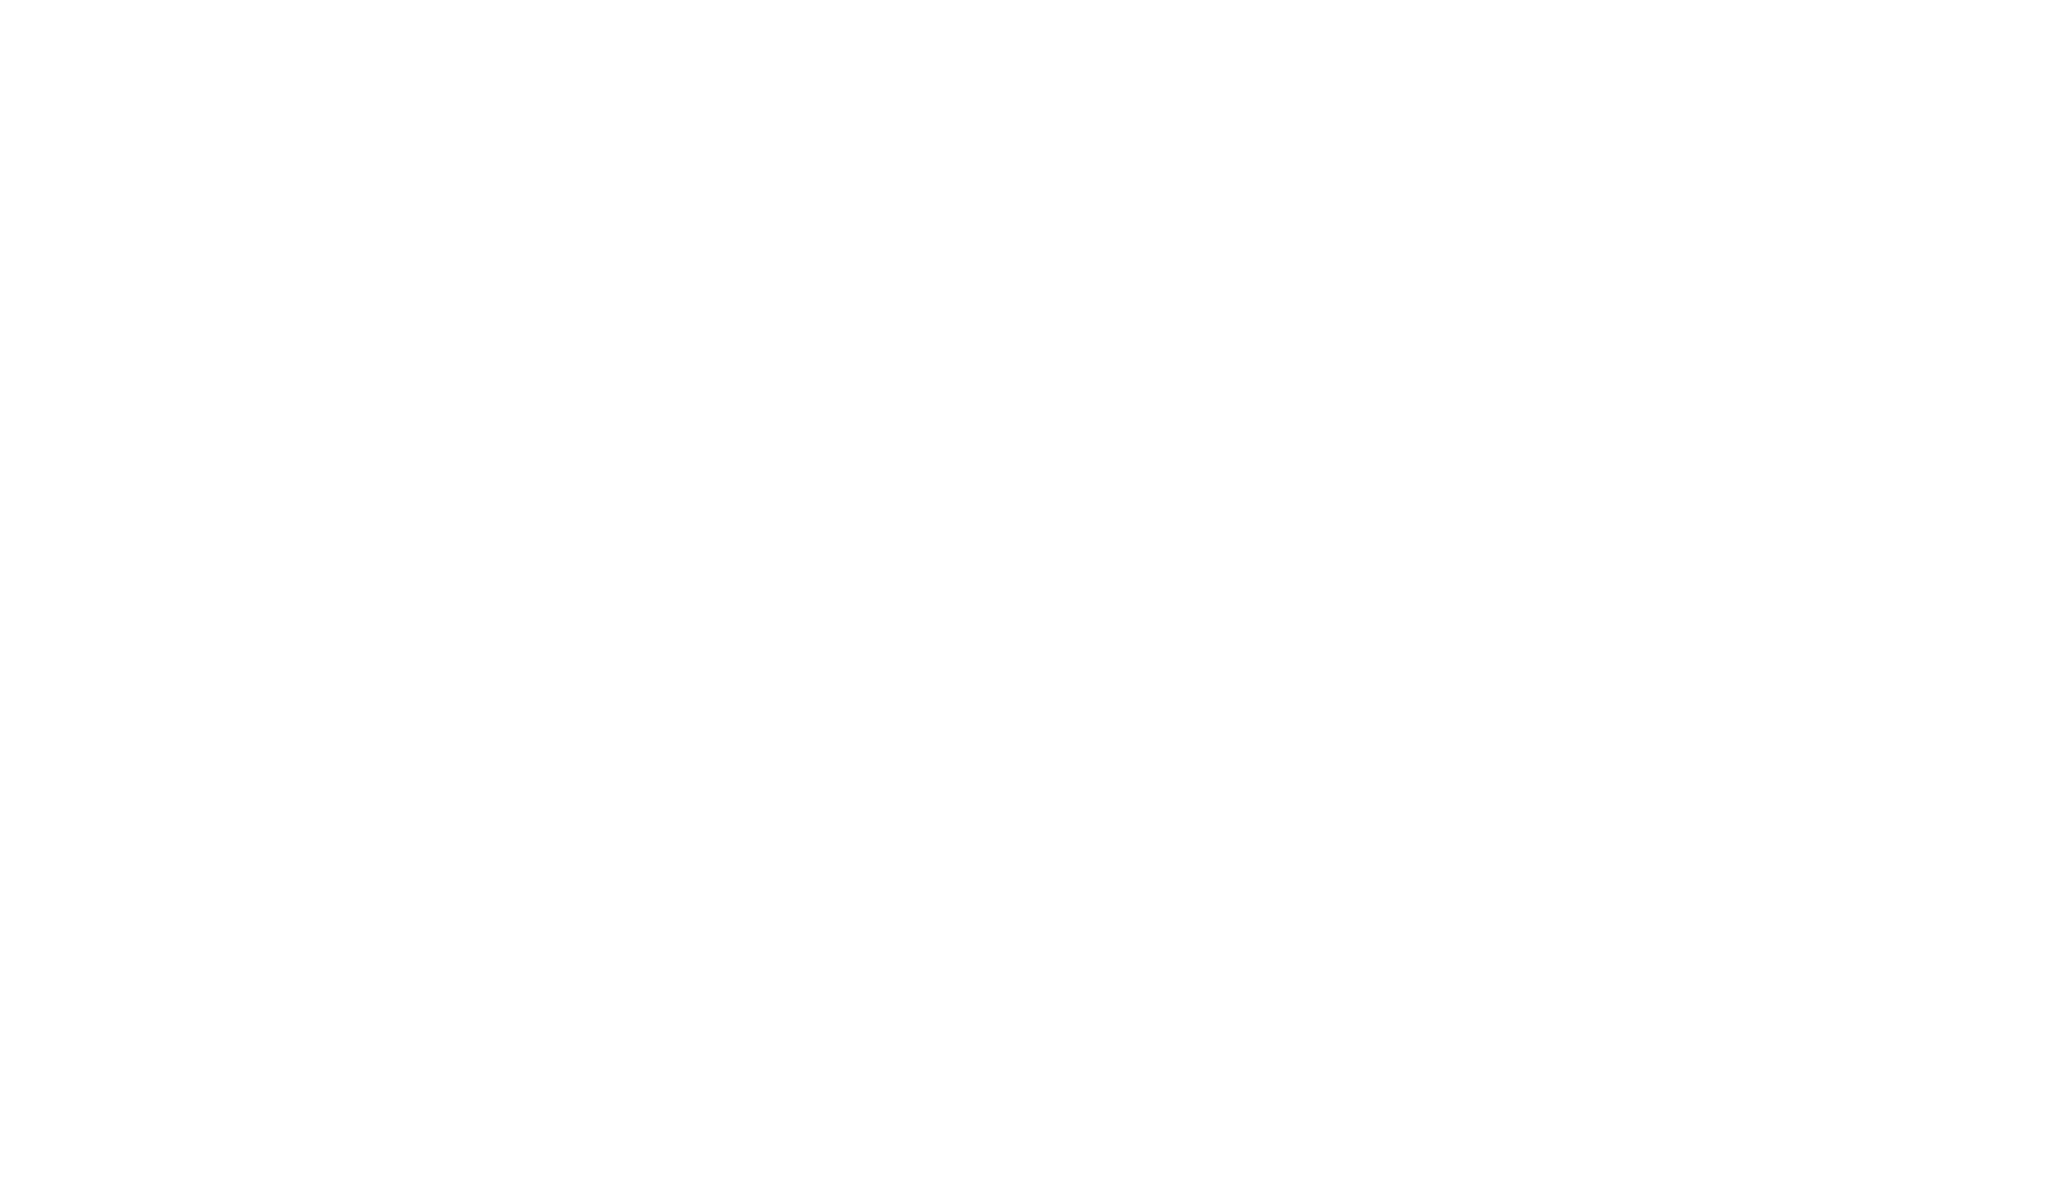 AT&T Supplier Portal